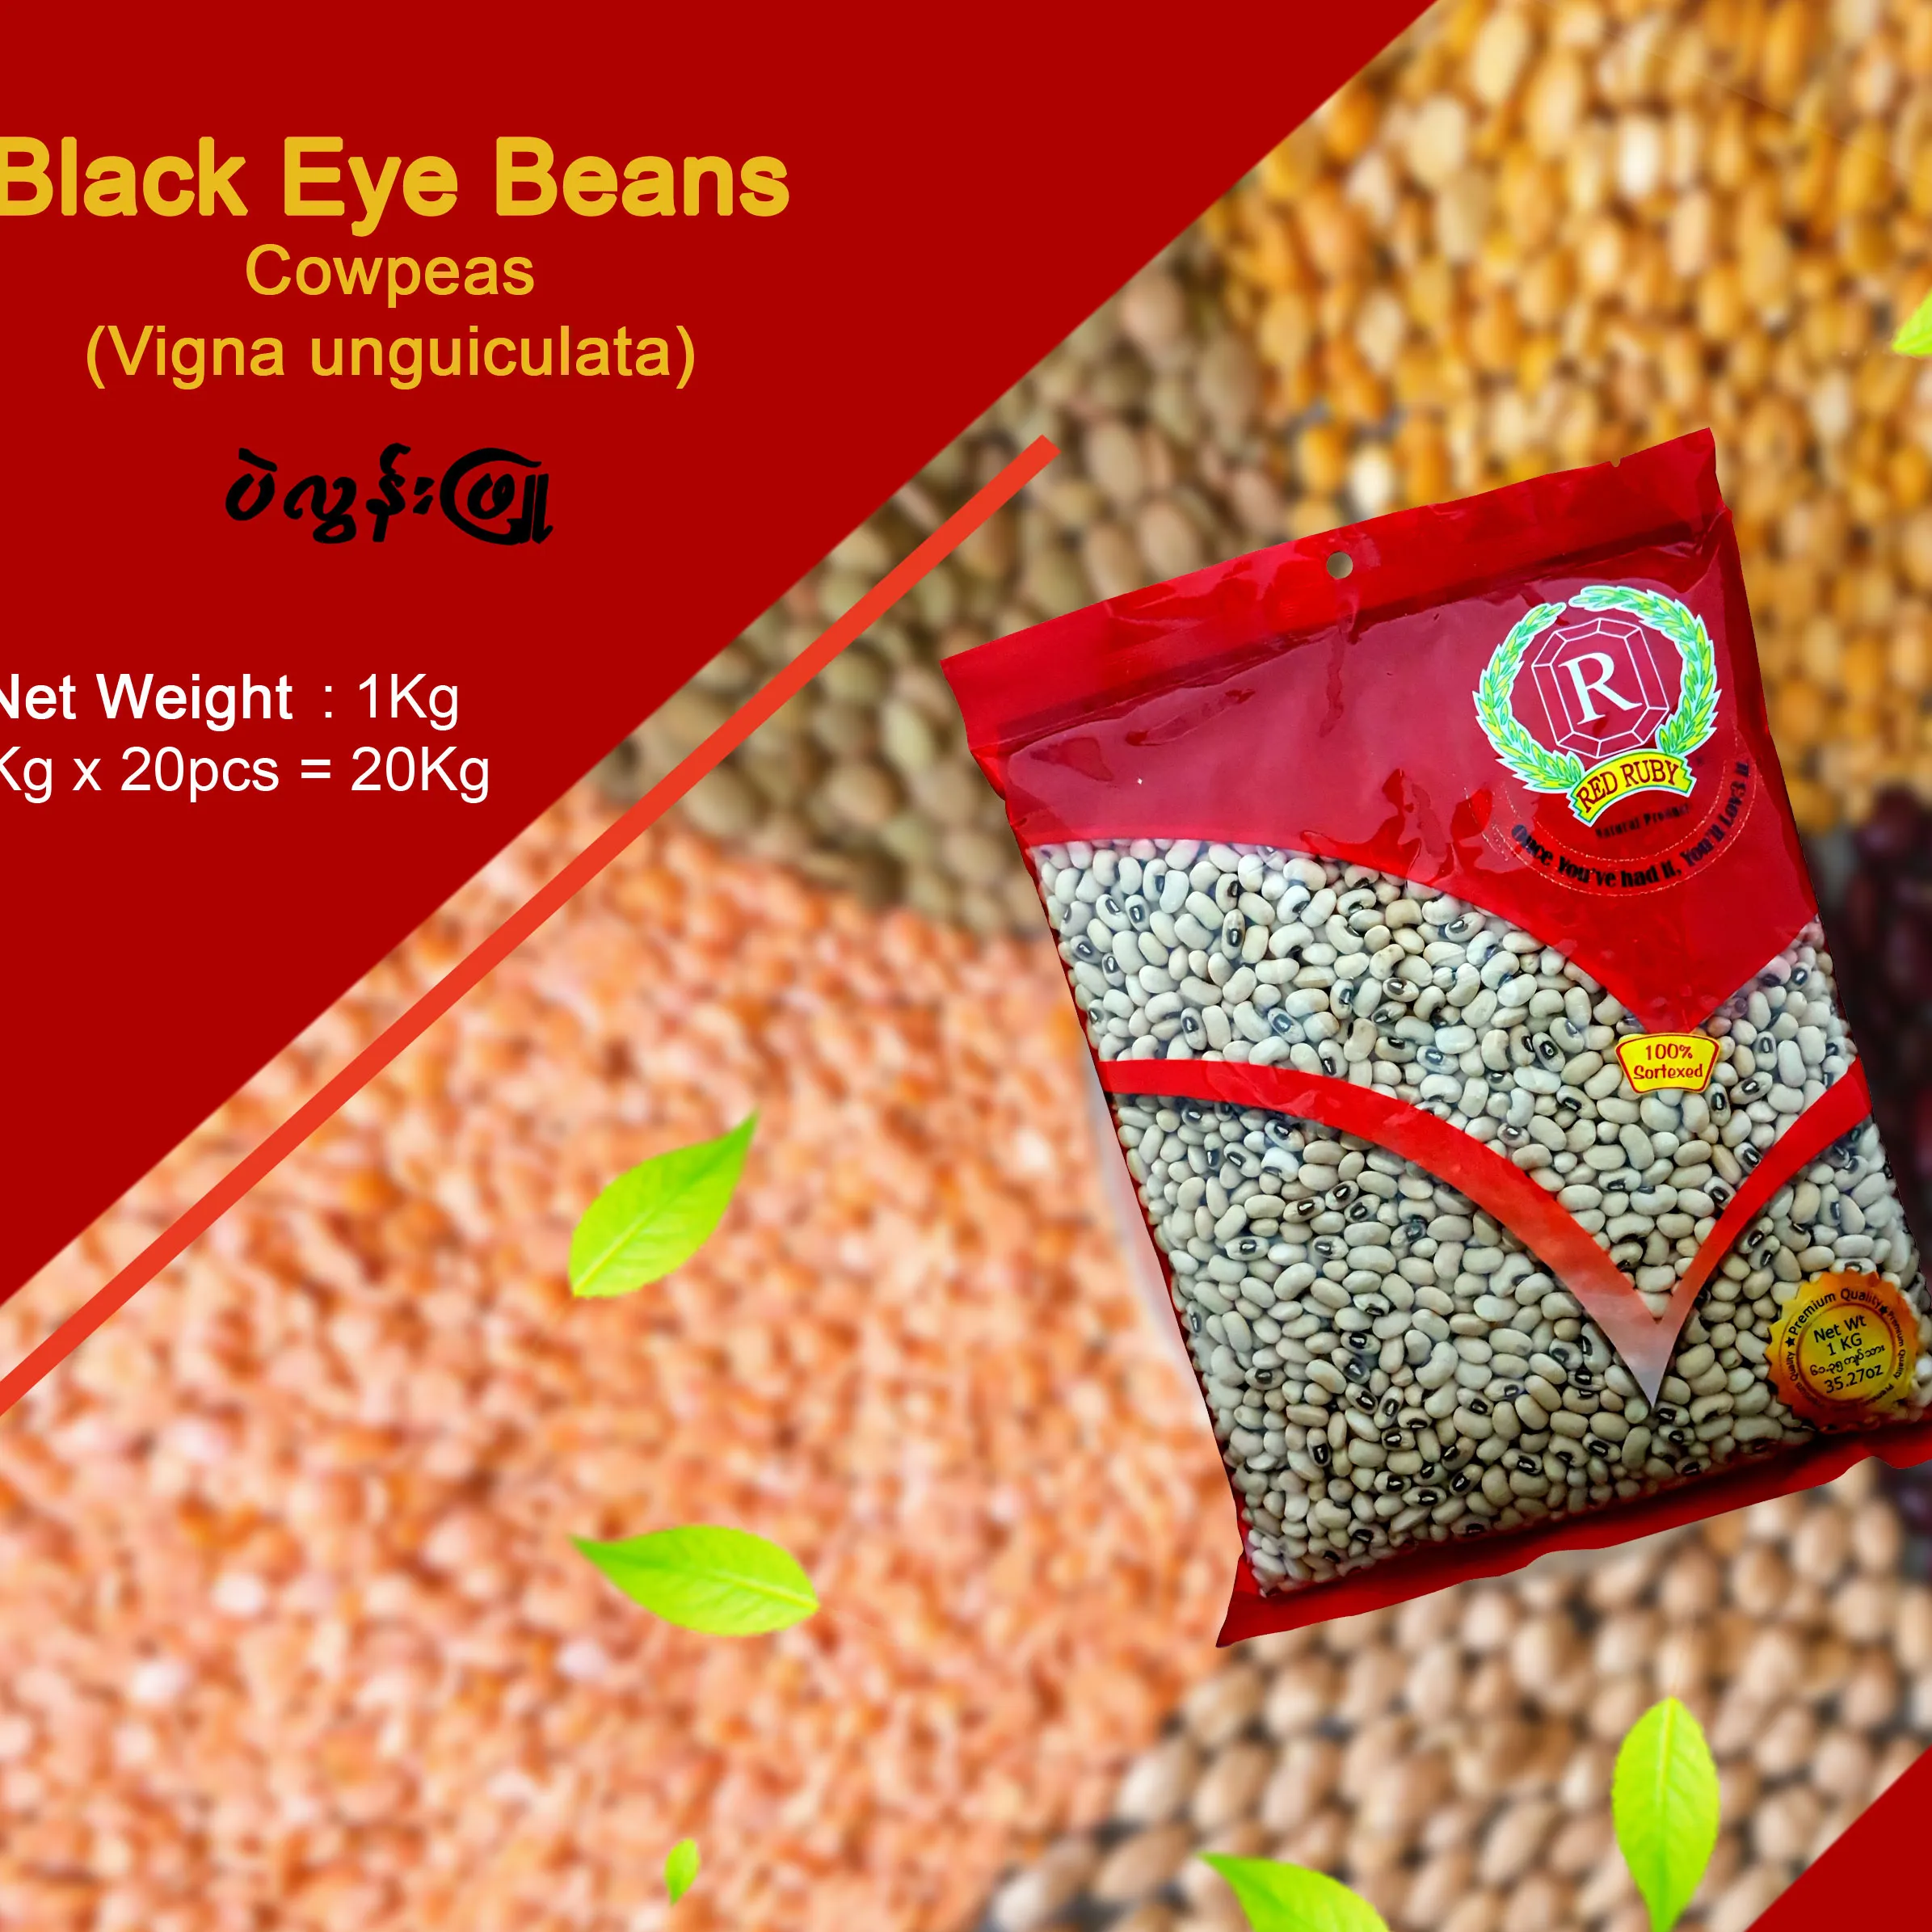 Black Eyed Beans / Cowpeas / Chora Whole / Vigna unguiculata ( Red Ruby Brand )